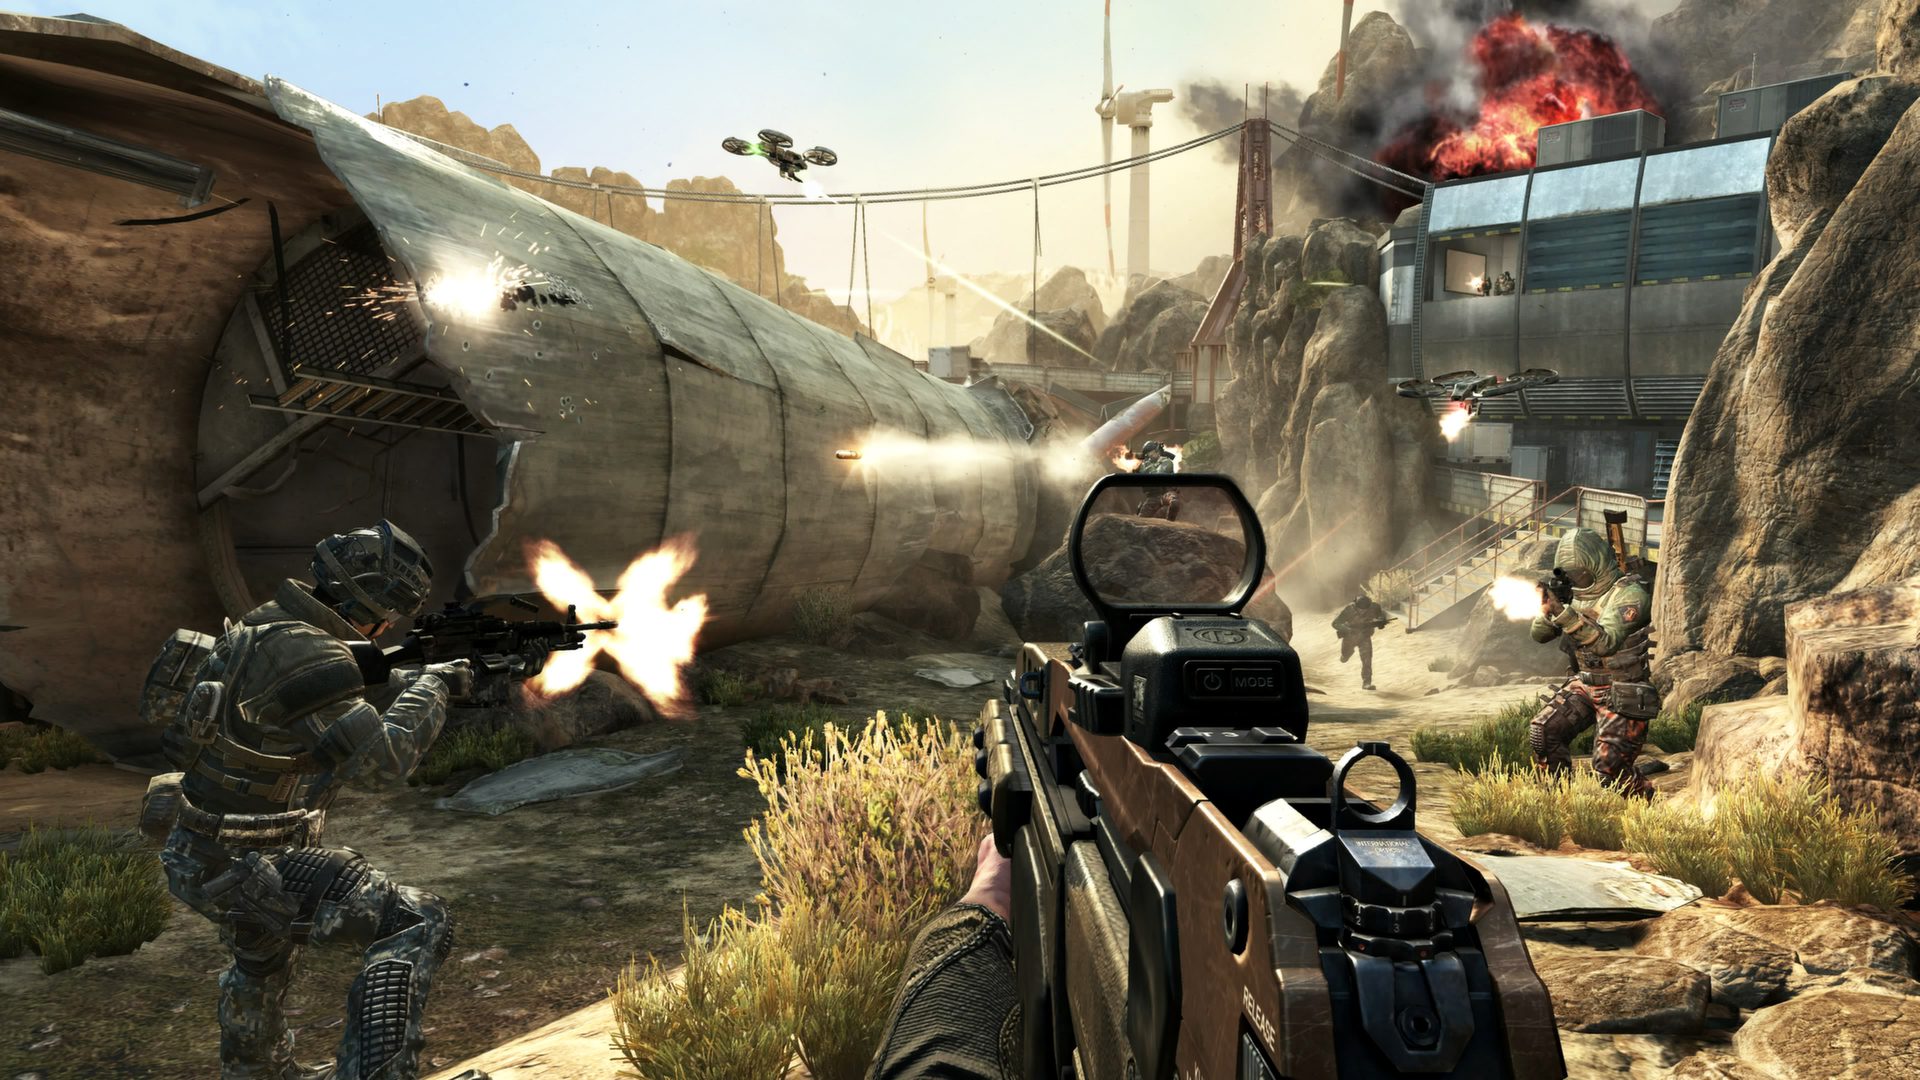 Call of Duty de 2025 pode ser sequência de Advanced Warfare